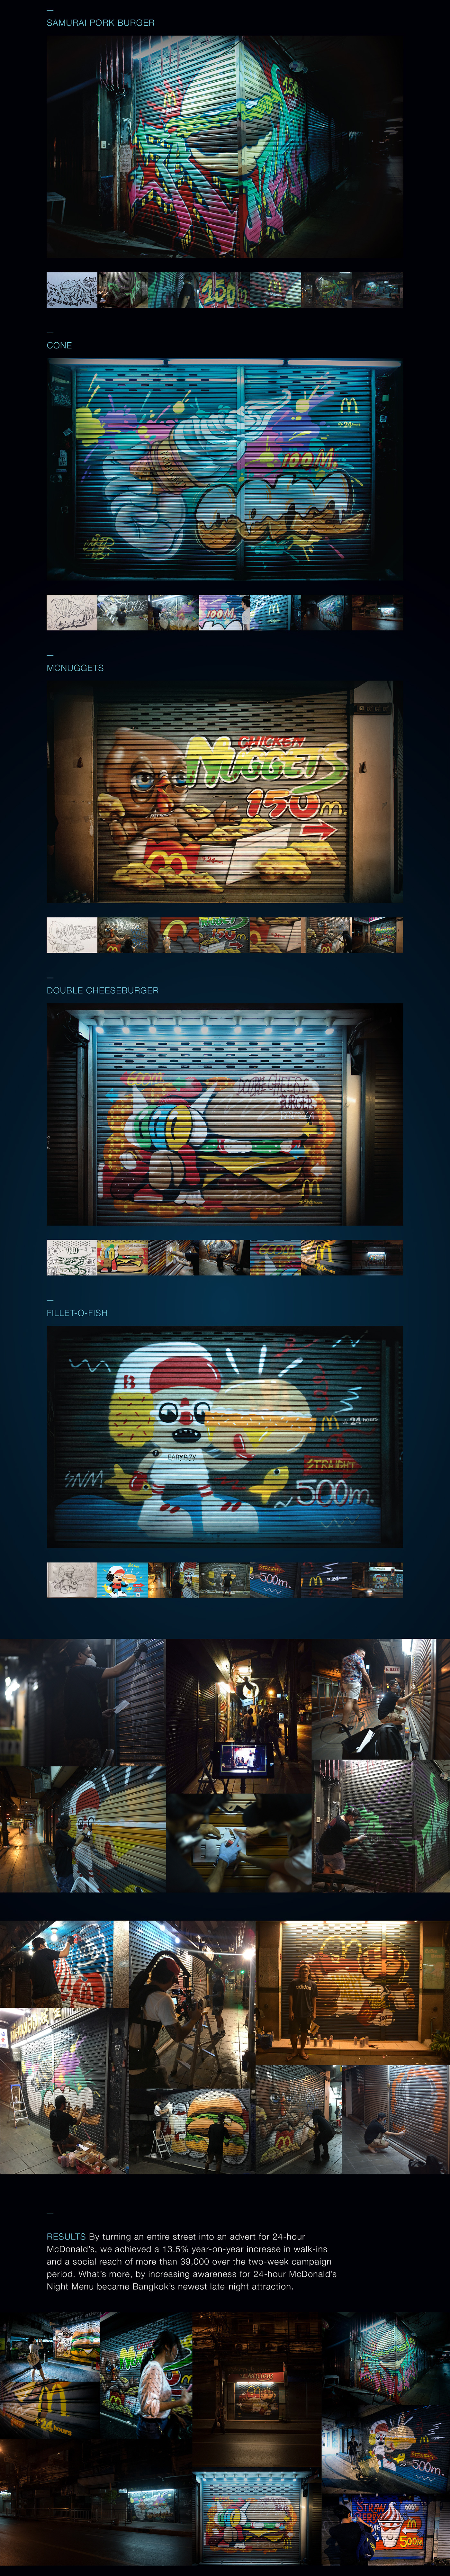 Bangkok grafitti McDonalds menu Outdoor campaign night Fast food Street Art 